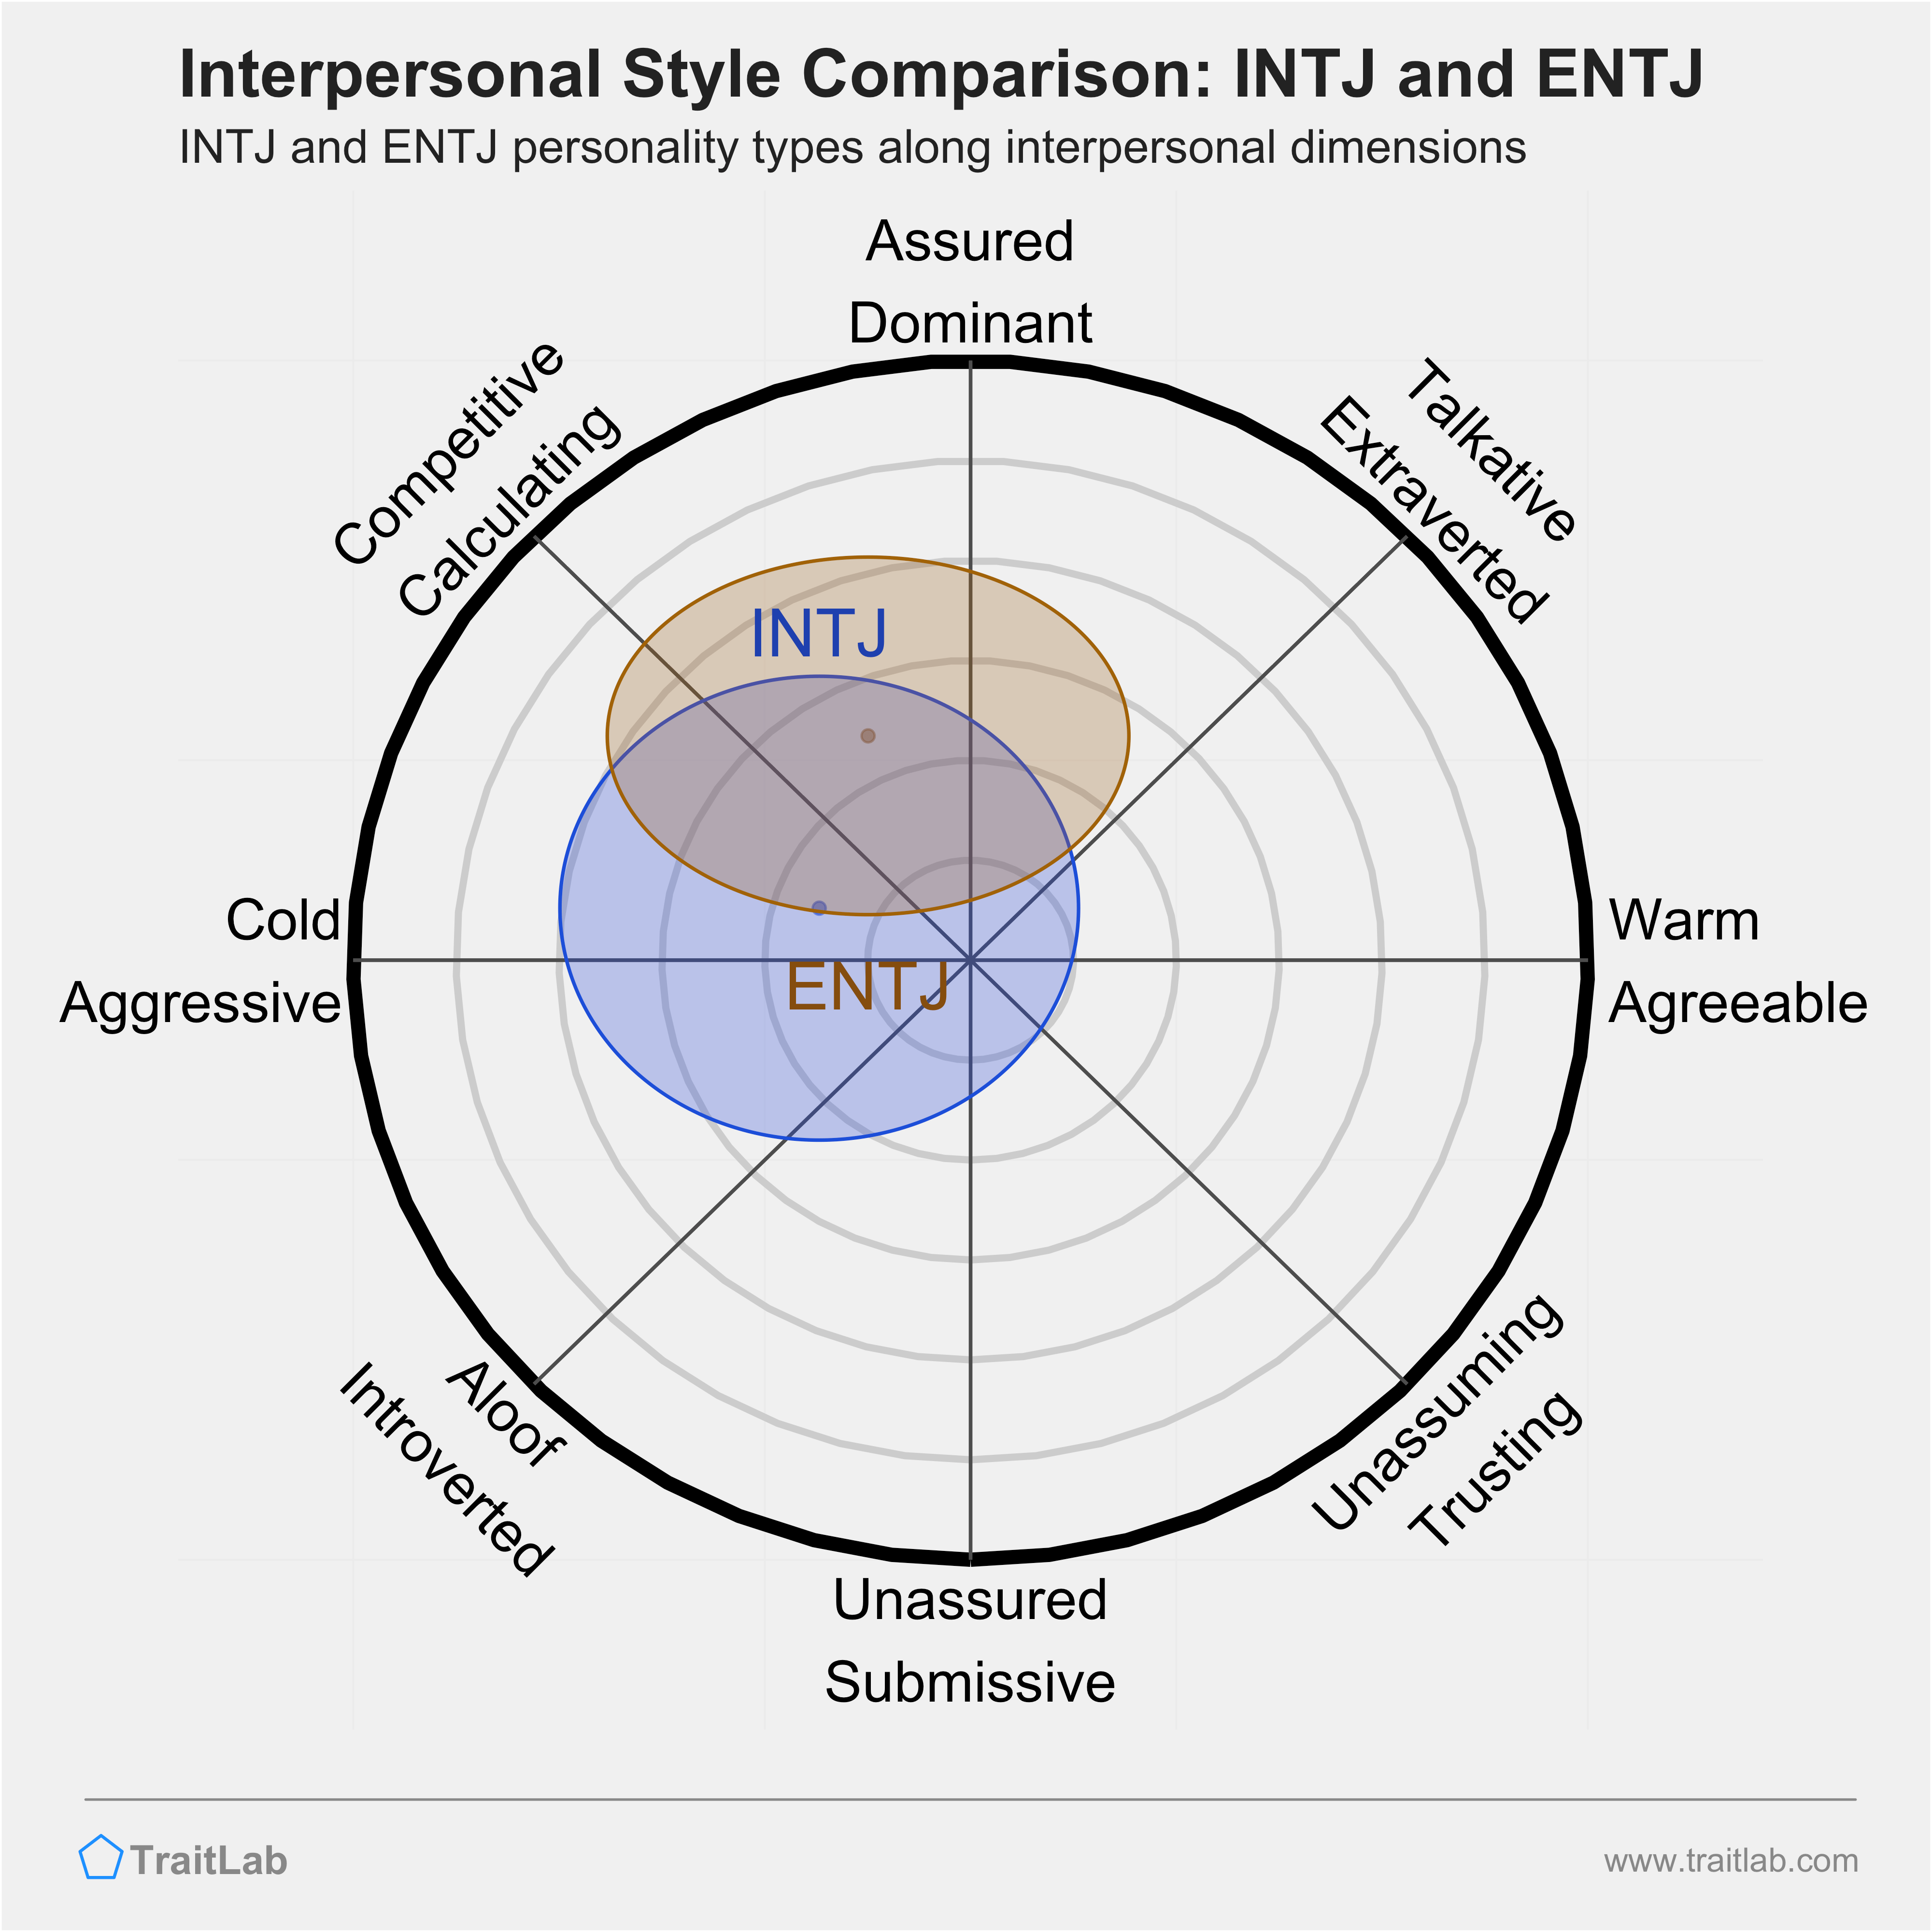 INTJ and ENTJ comparison across interpersonal dimensions